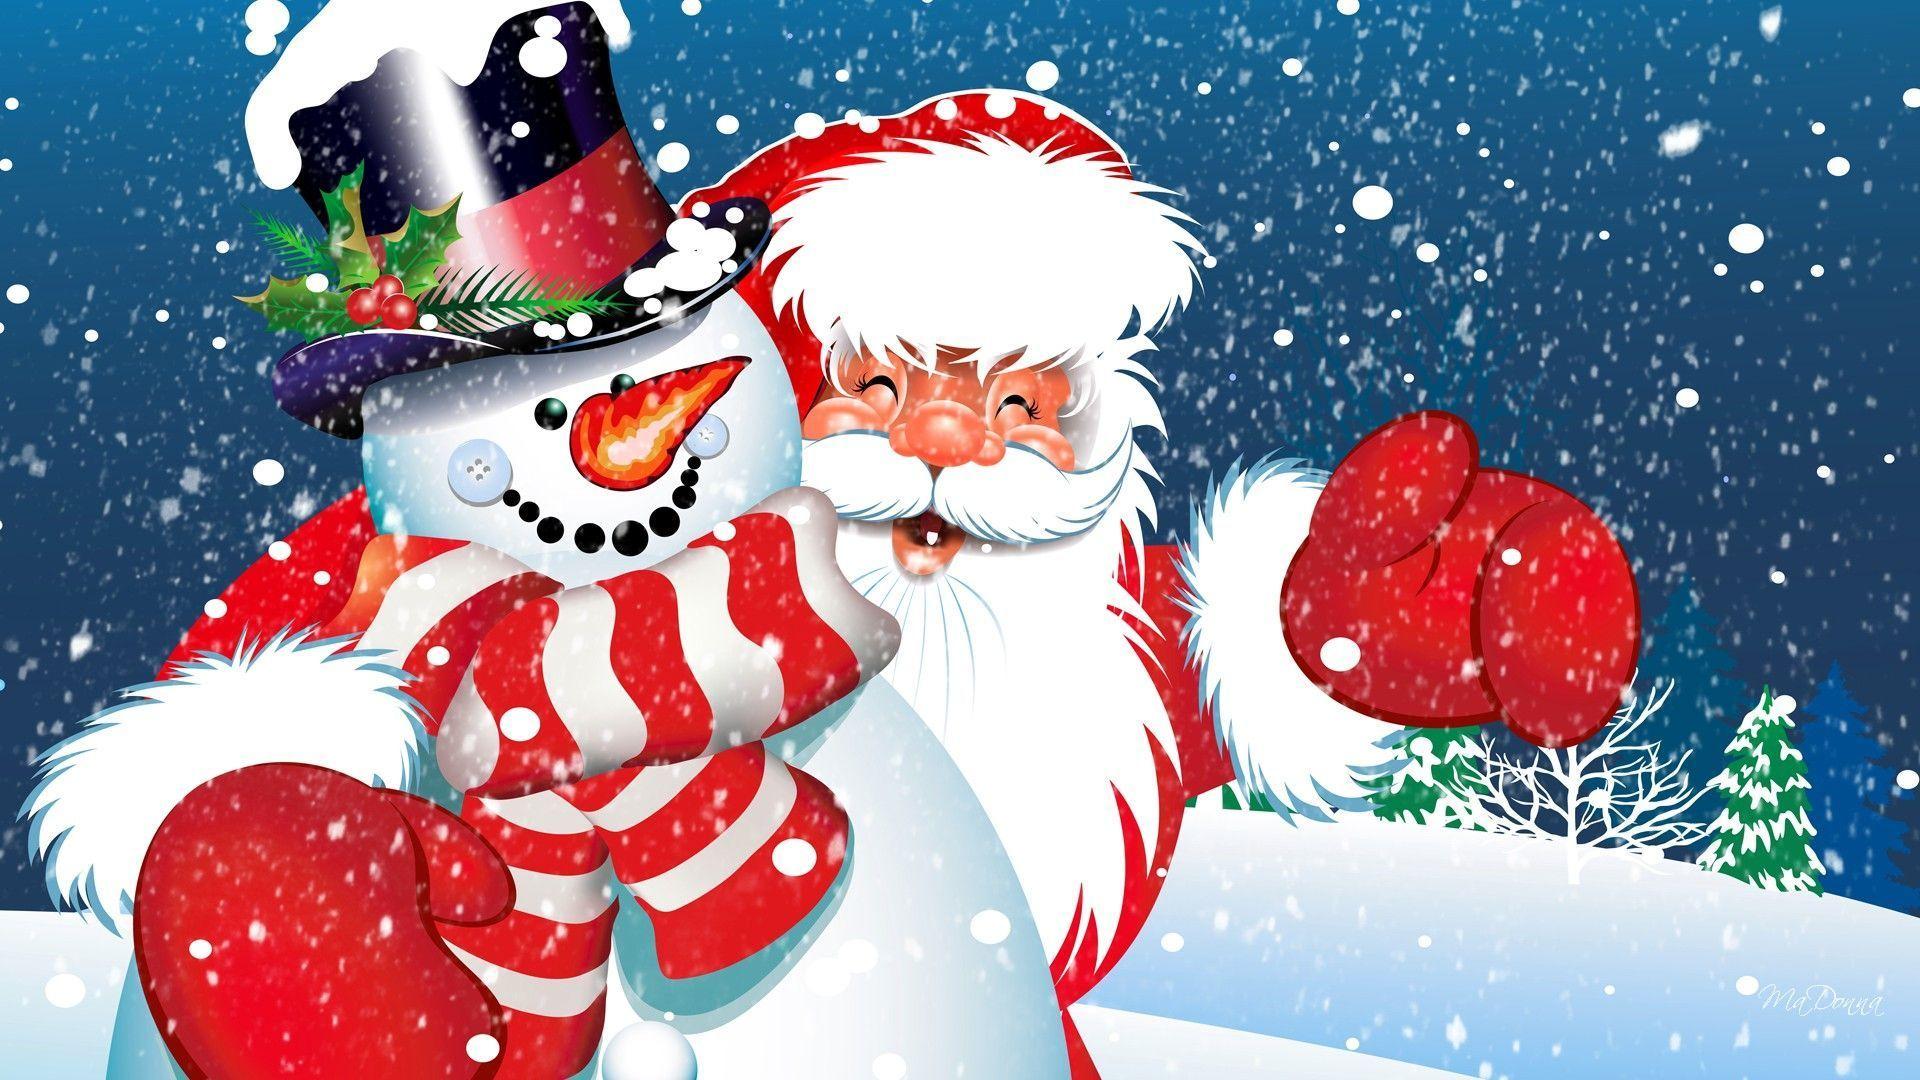 Wallpaper For > Frosty The Snowman Wallpaper Desktop